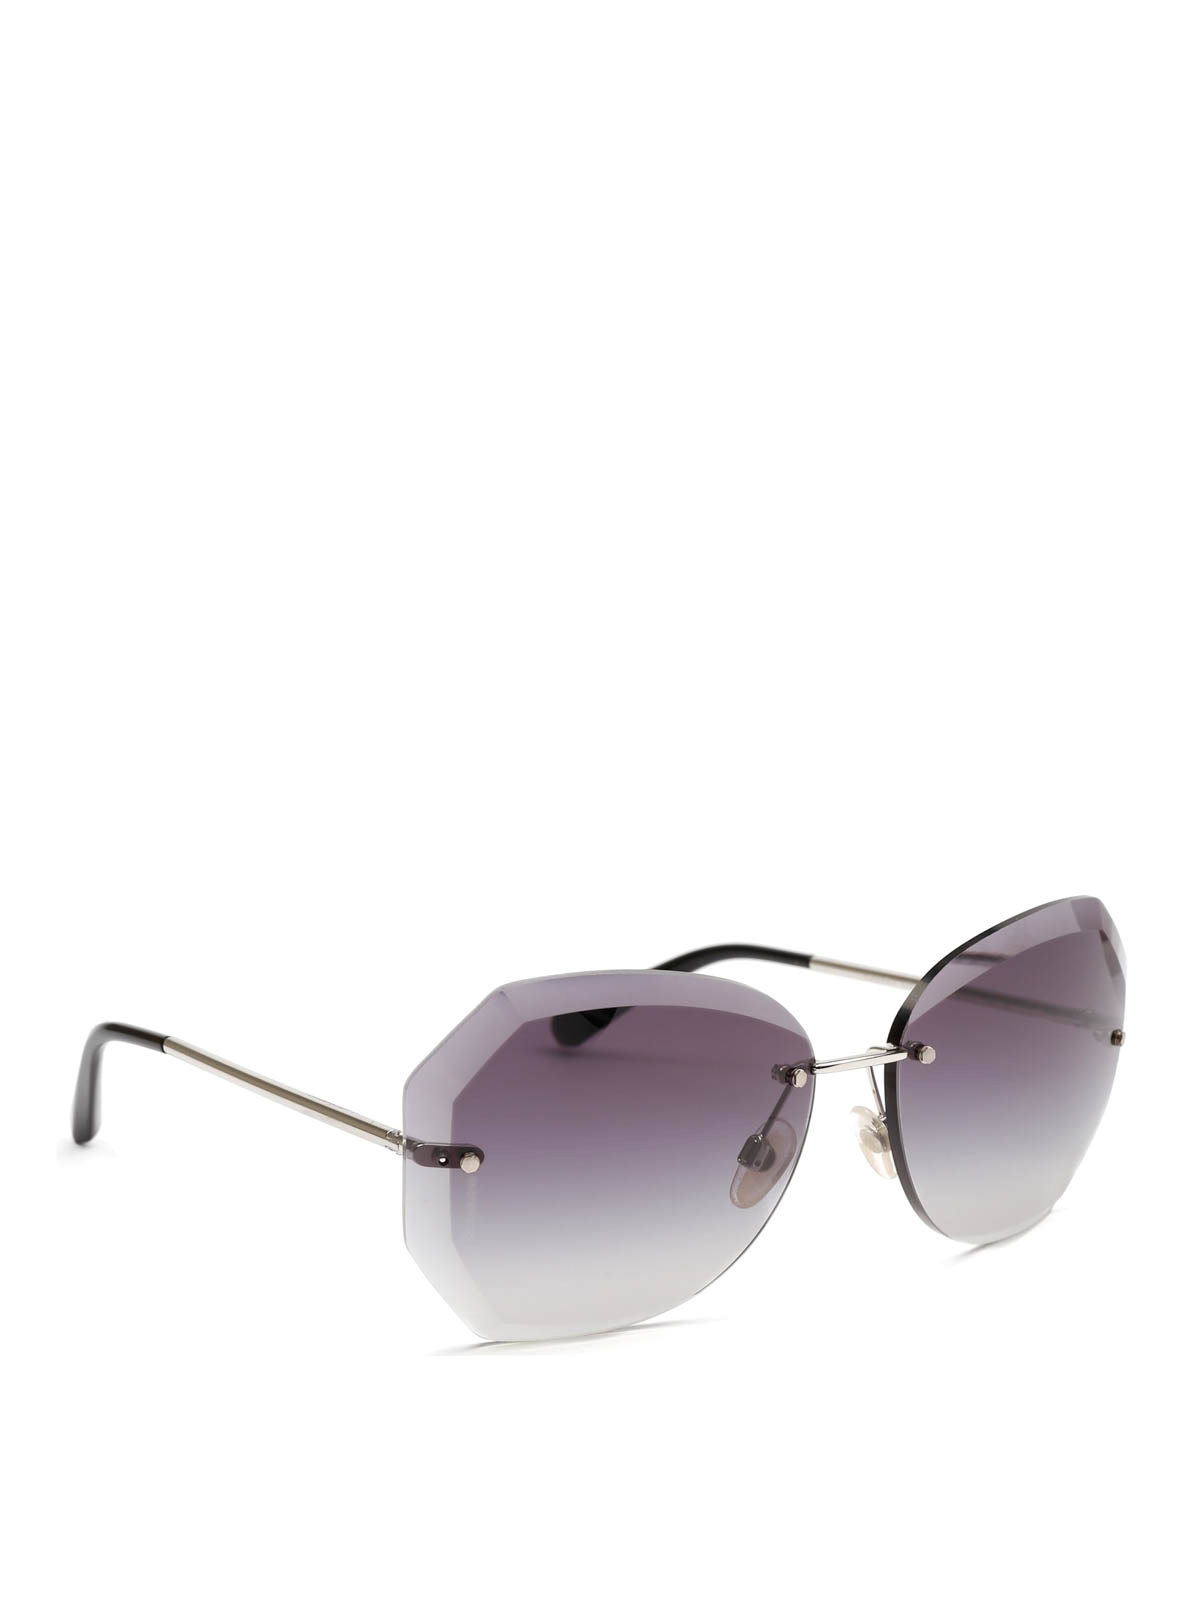 Rimless Chanel Sunglasses 